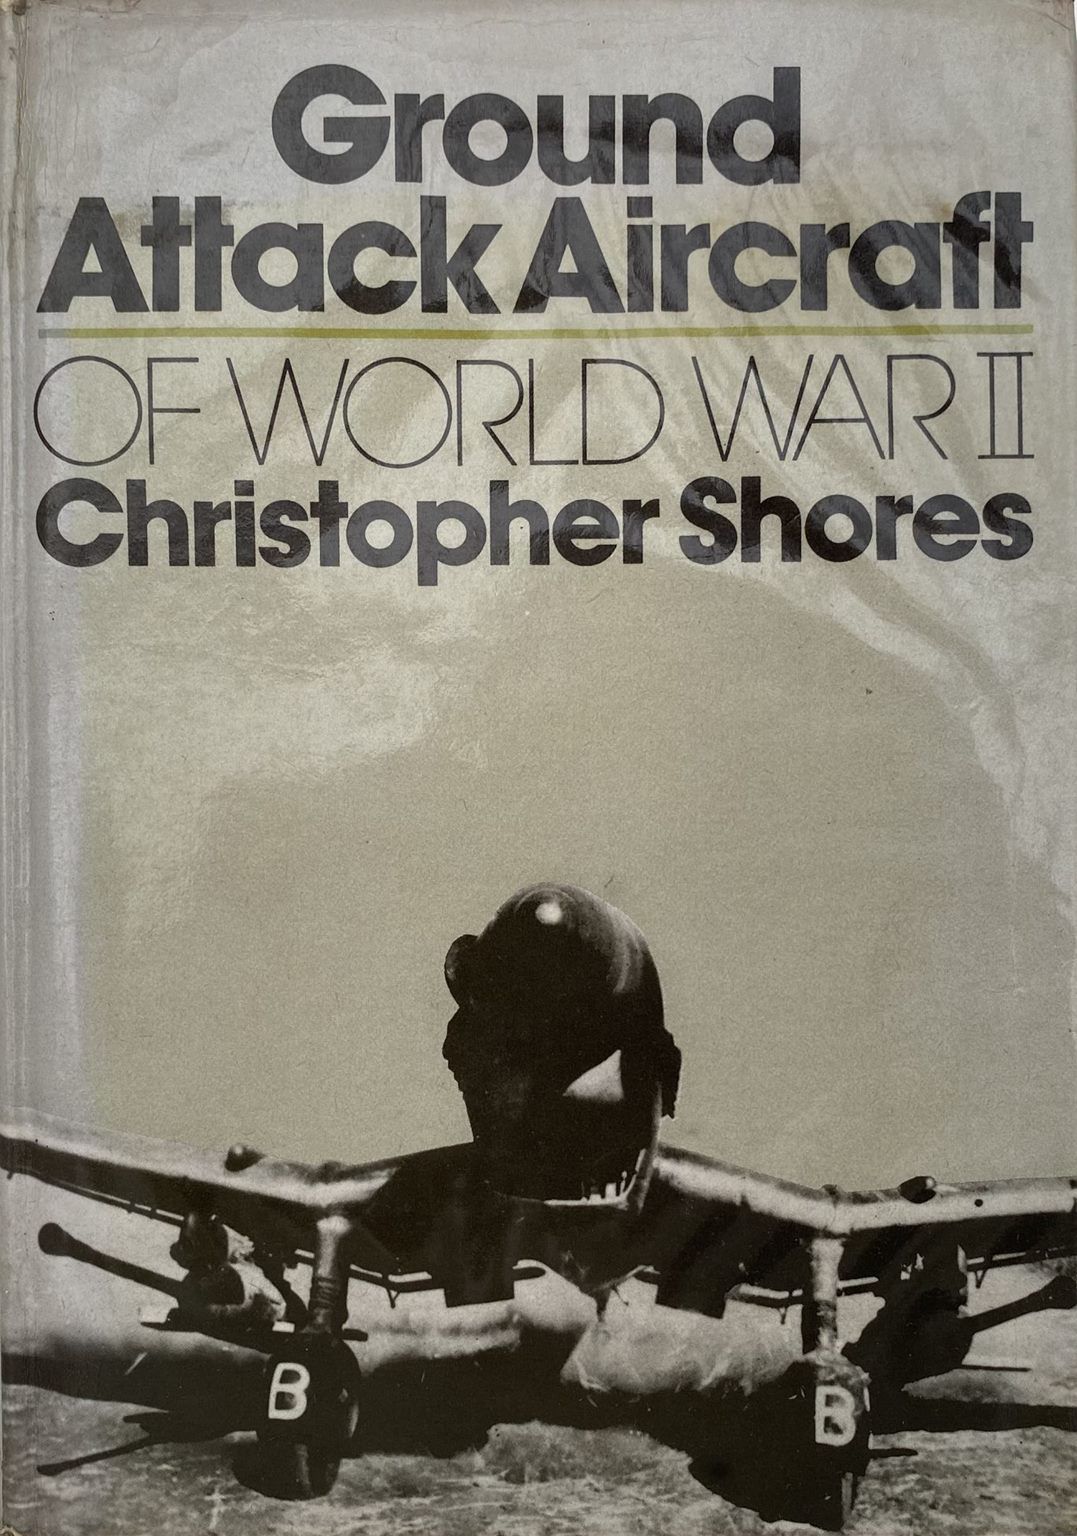 GROUND ATTACK AIRCRAFT of World War II